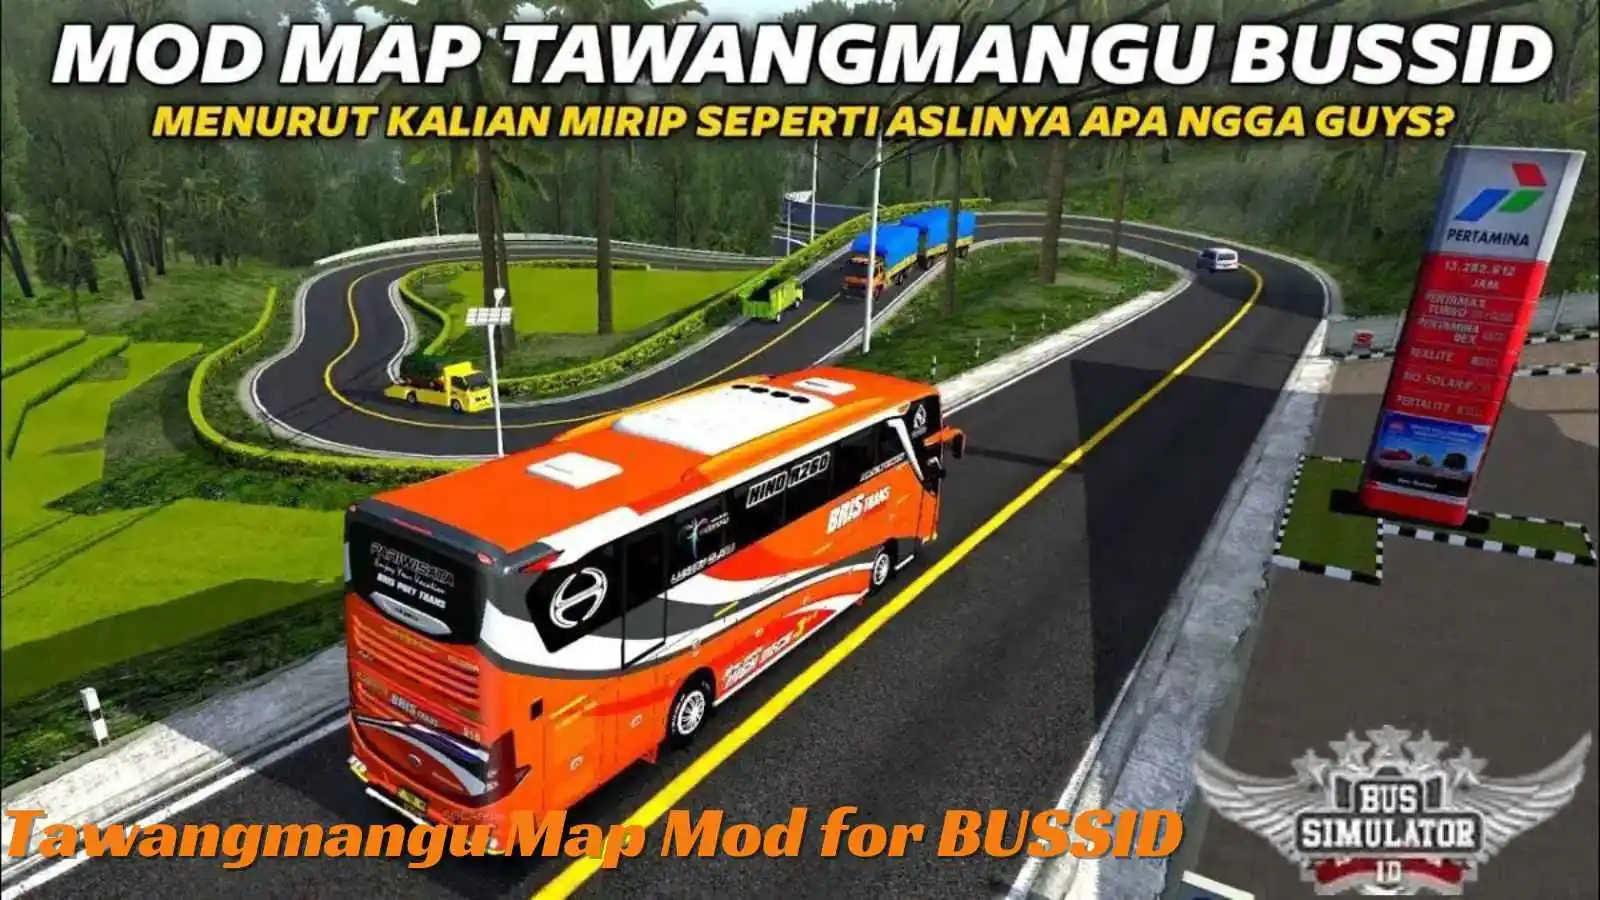 Tawangmangu-Map-Mod-for-BUSSID